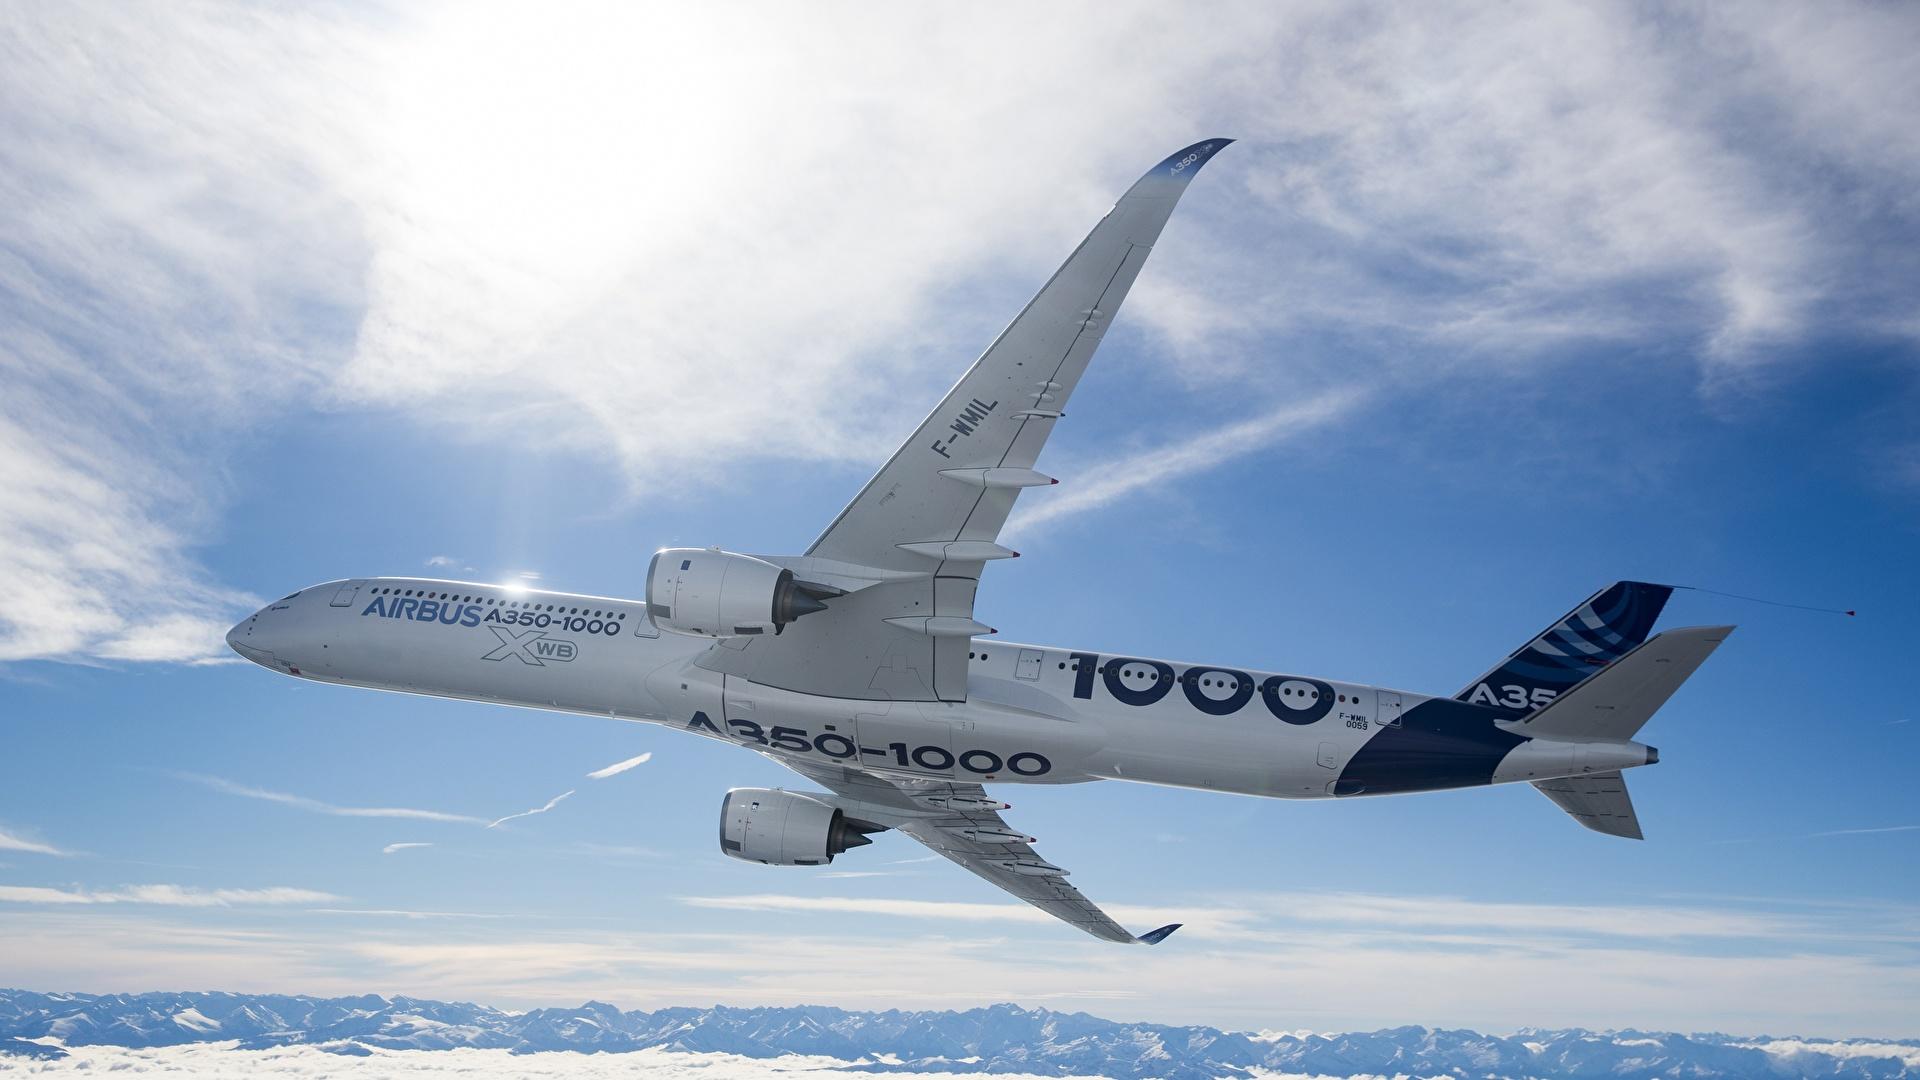 Wallpaper Airbus Airplane Passenger Airplanes A350 1000 1920x1080